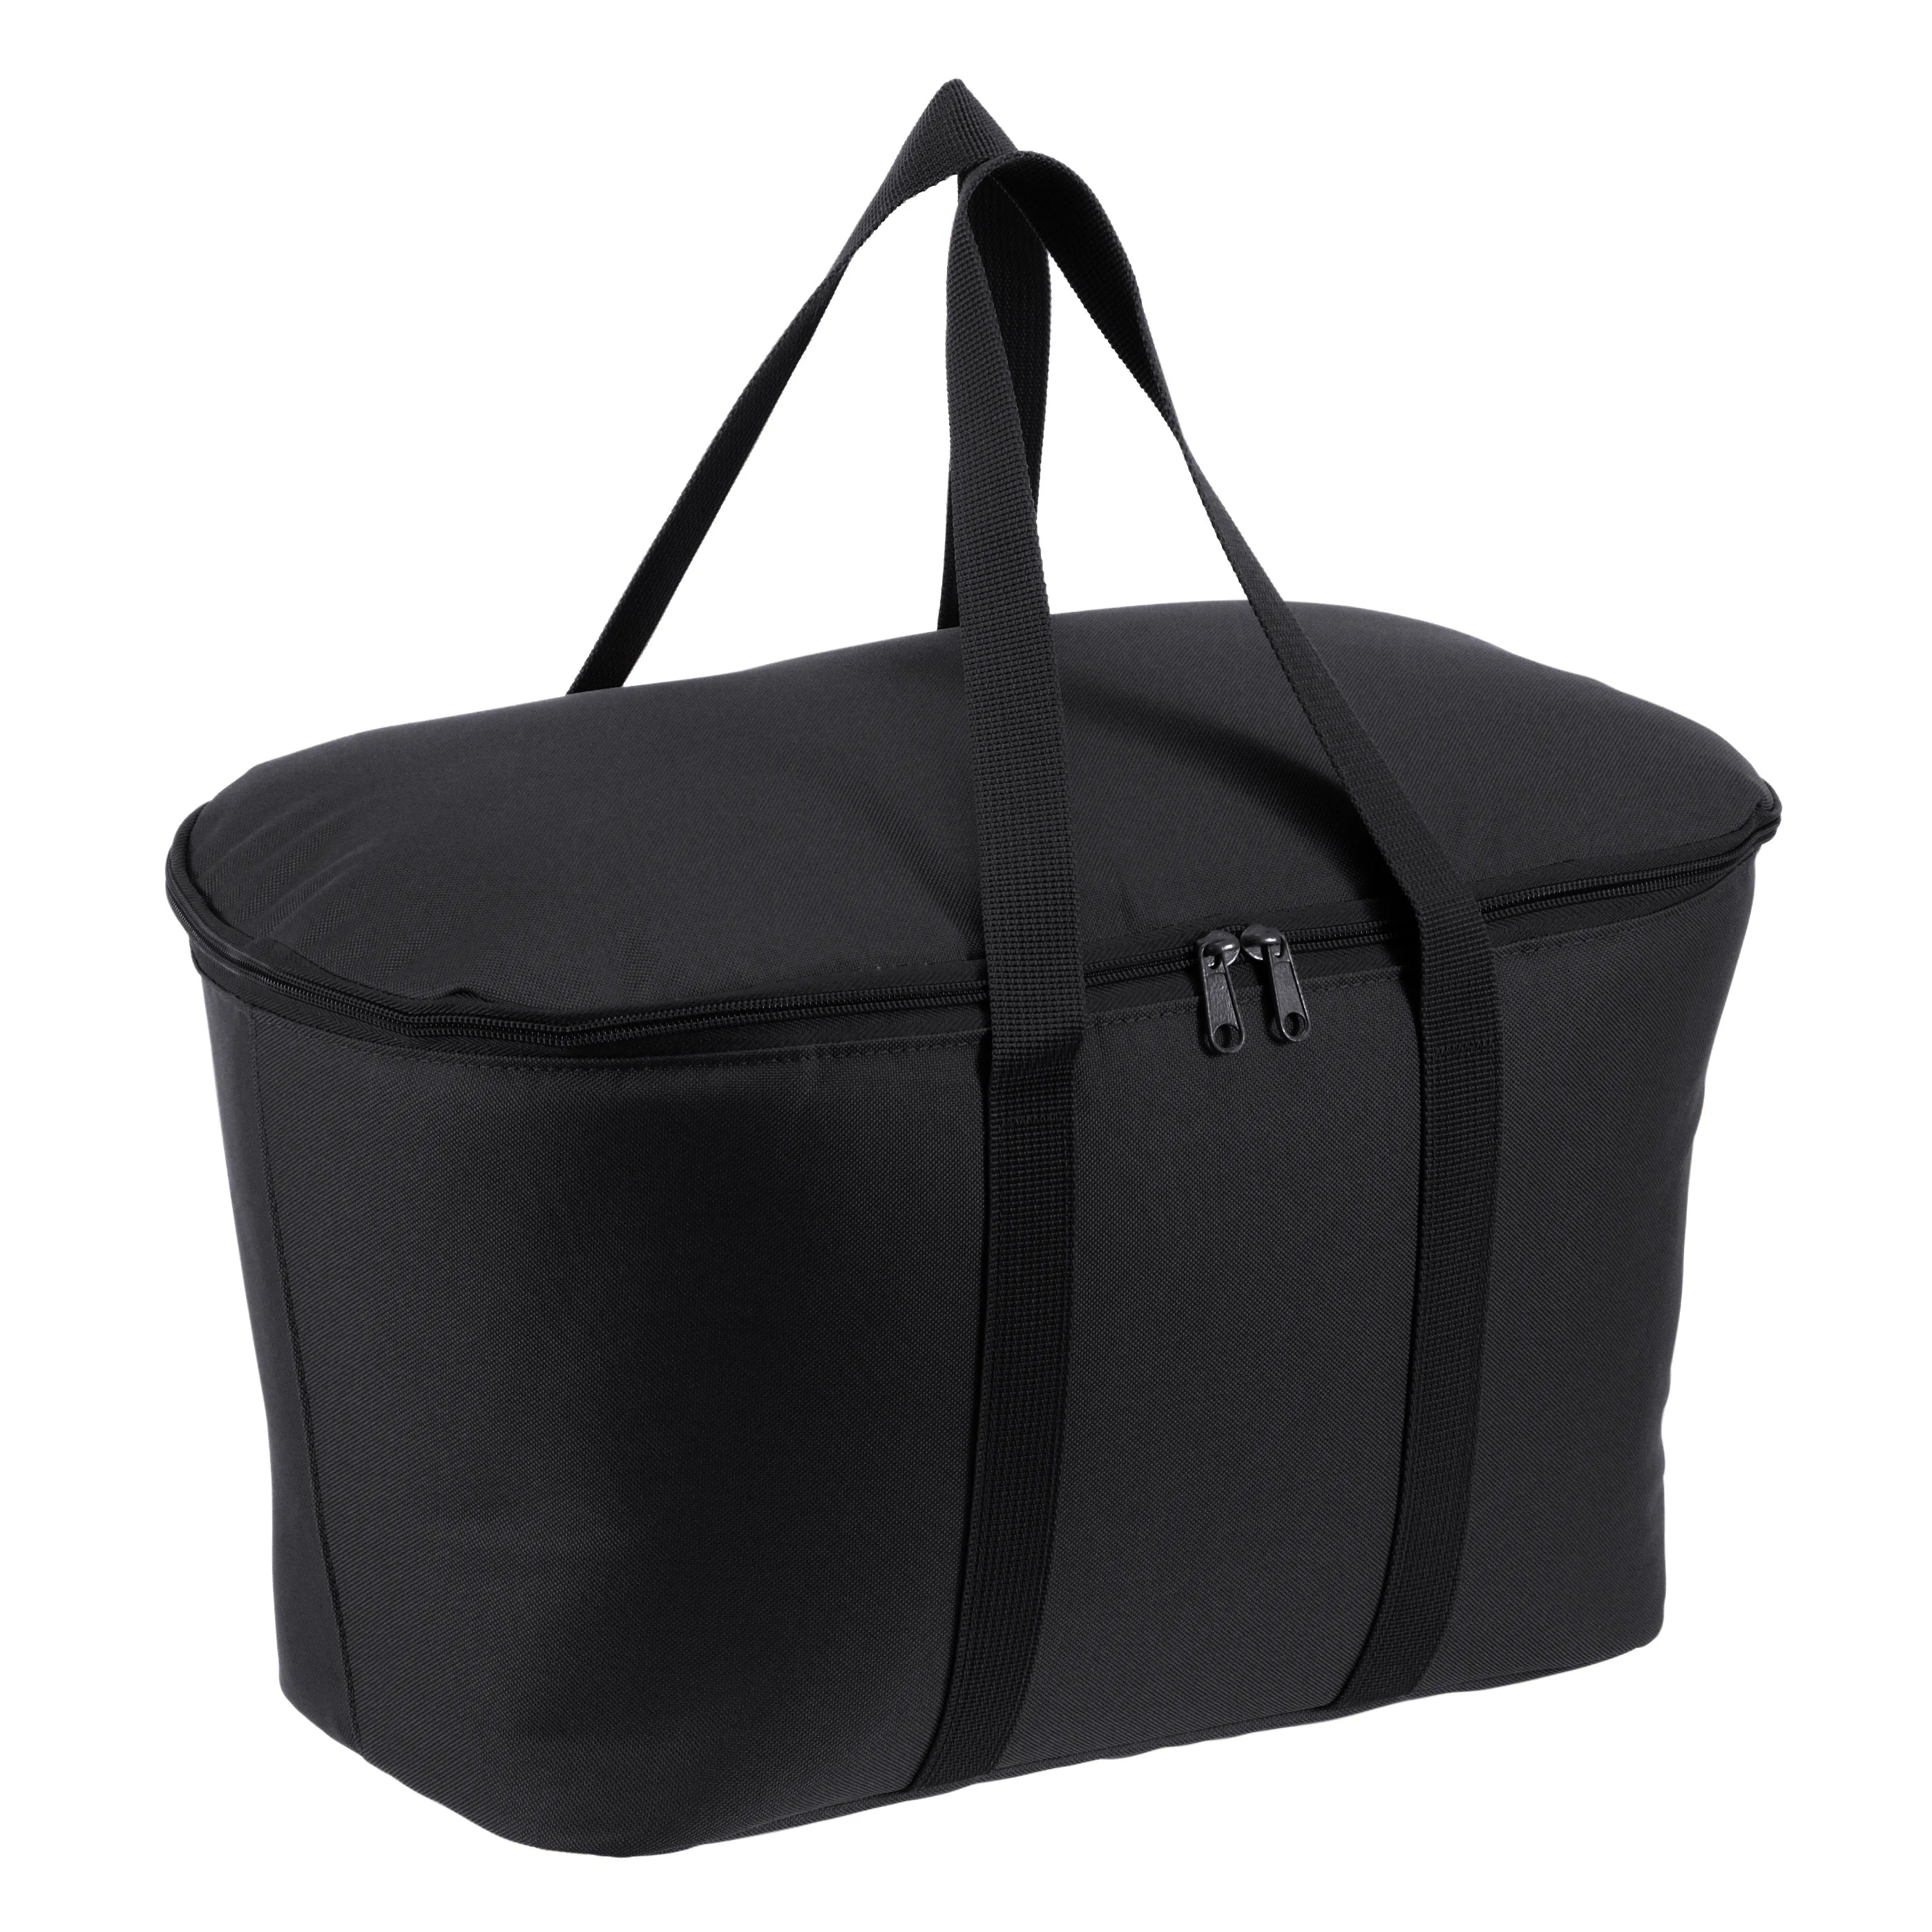 Reisenthel Shopping Coolerbag cooler bag 44 cm - black